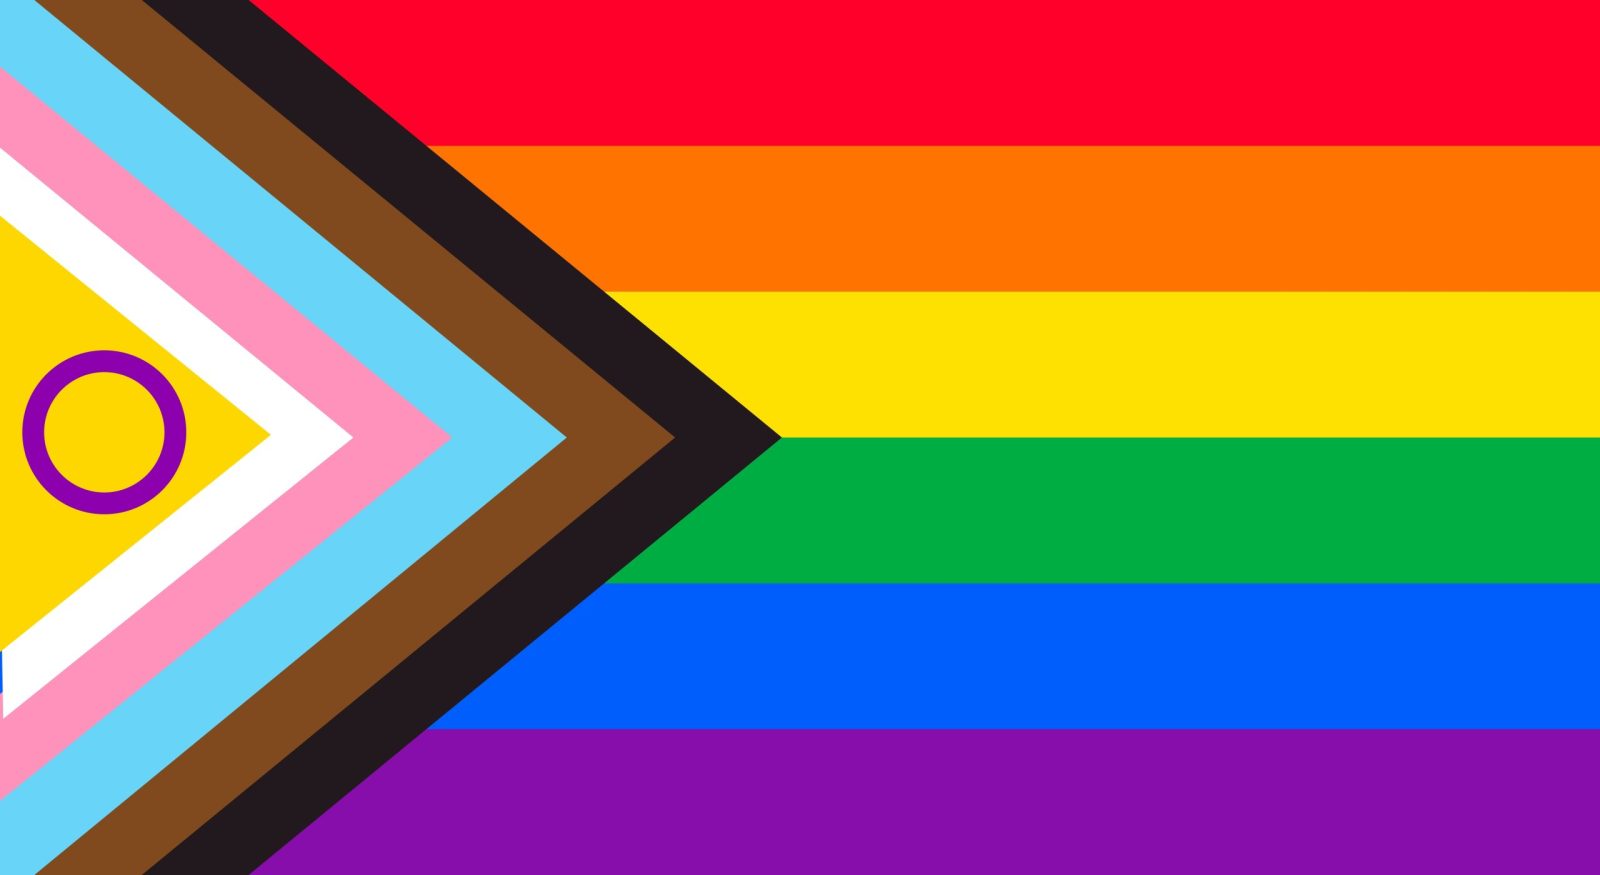 LGBTQI+ flag